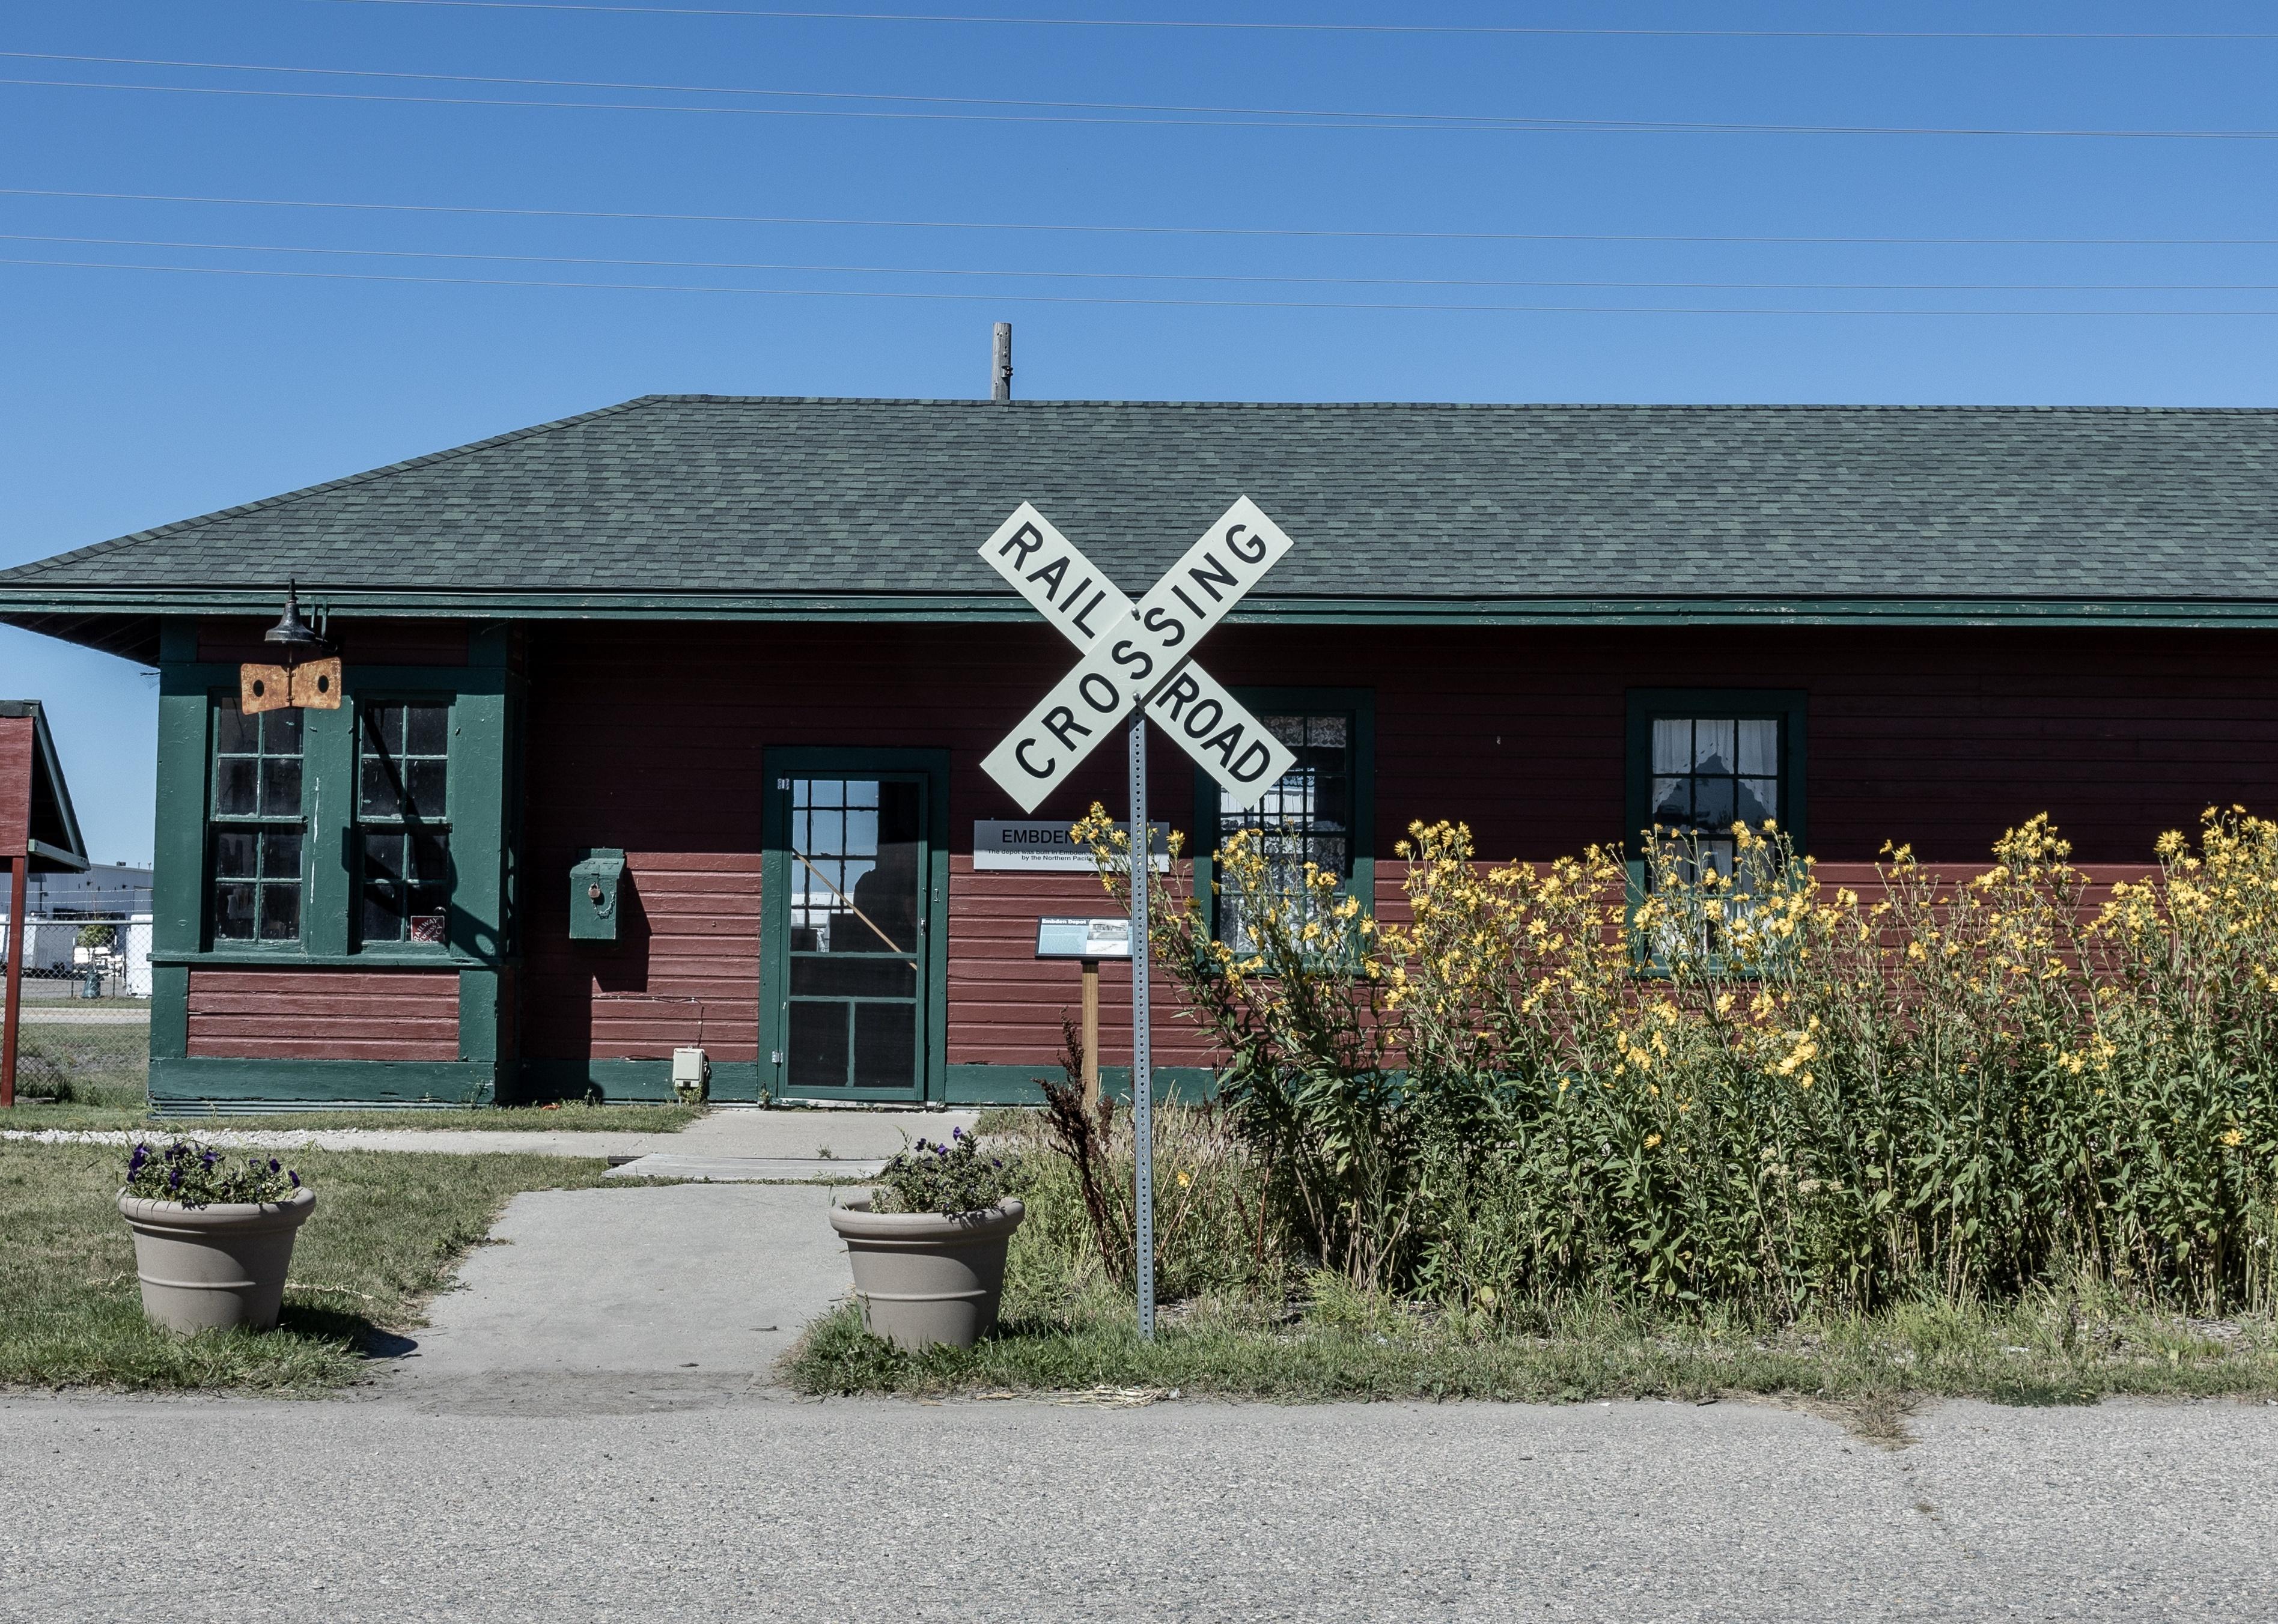 Train station and museum in West Fargo, North Dakota.